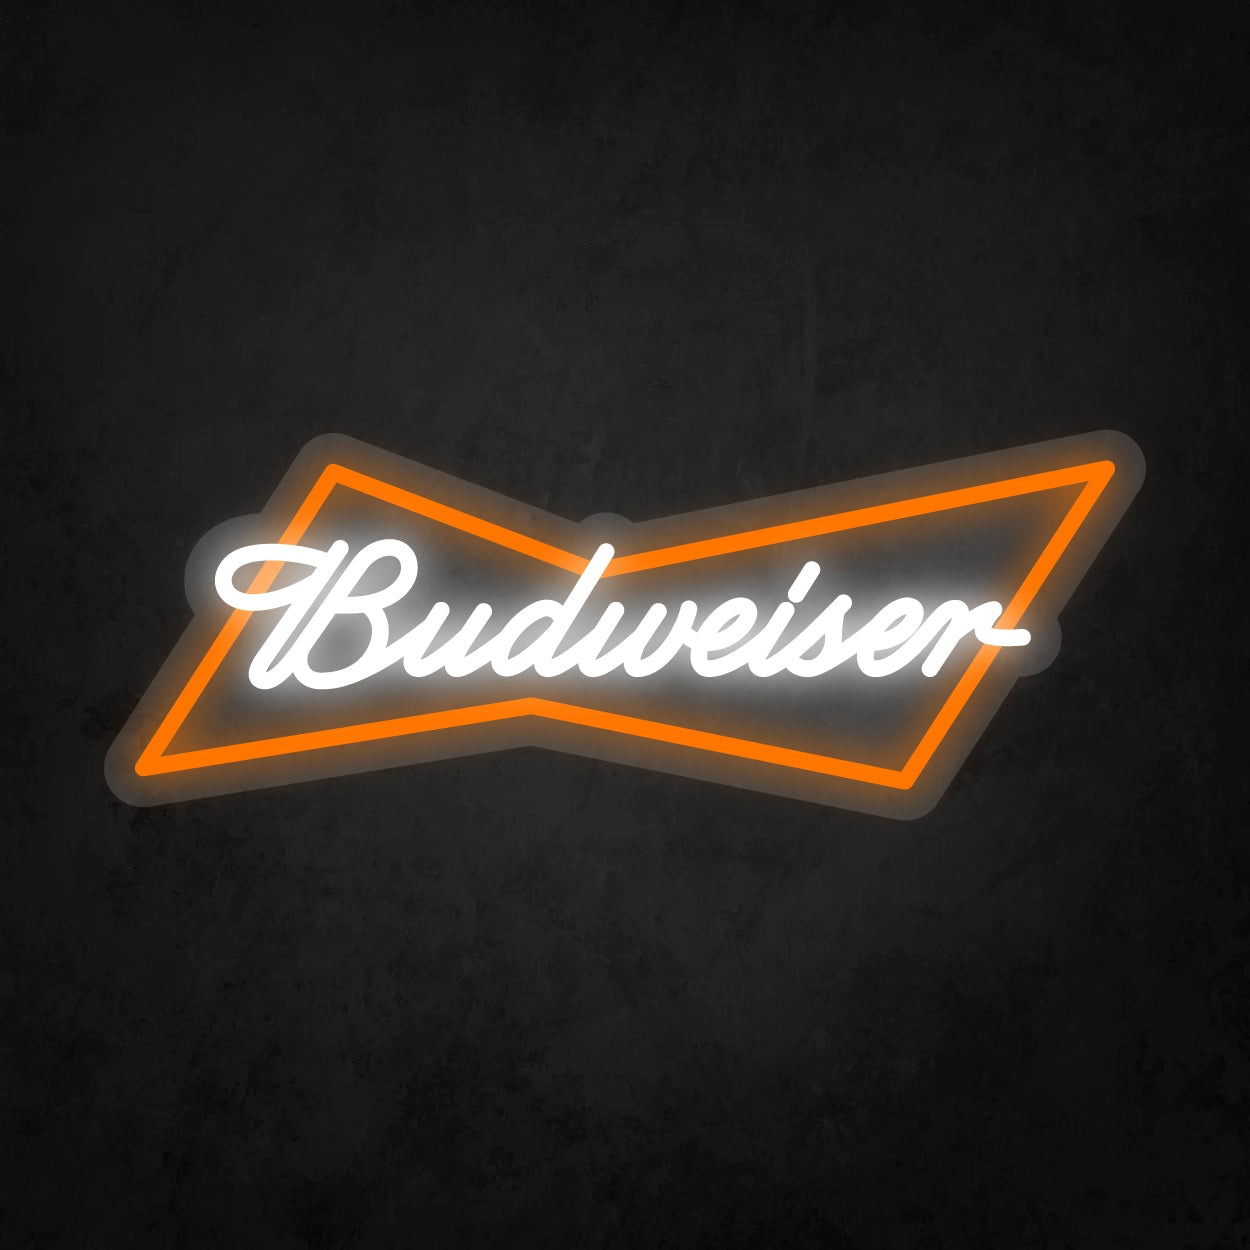 LED Neon Sign - Budweiser